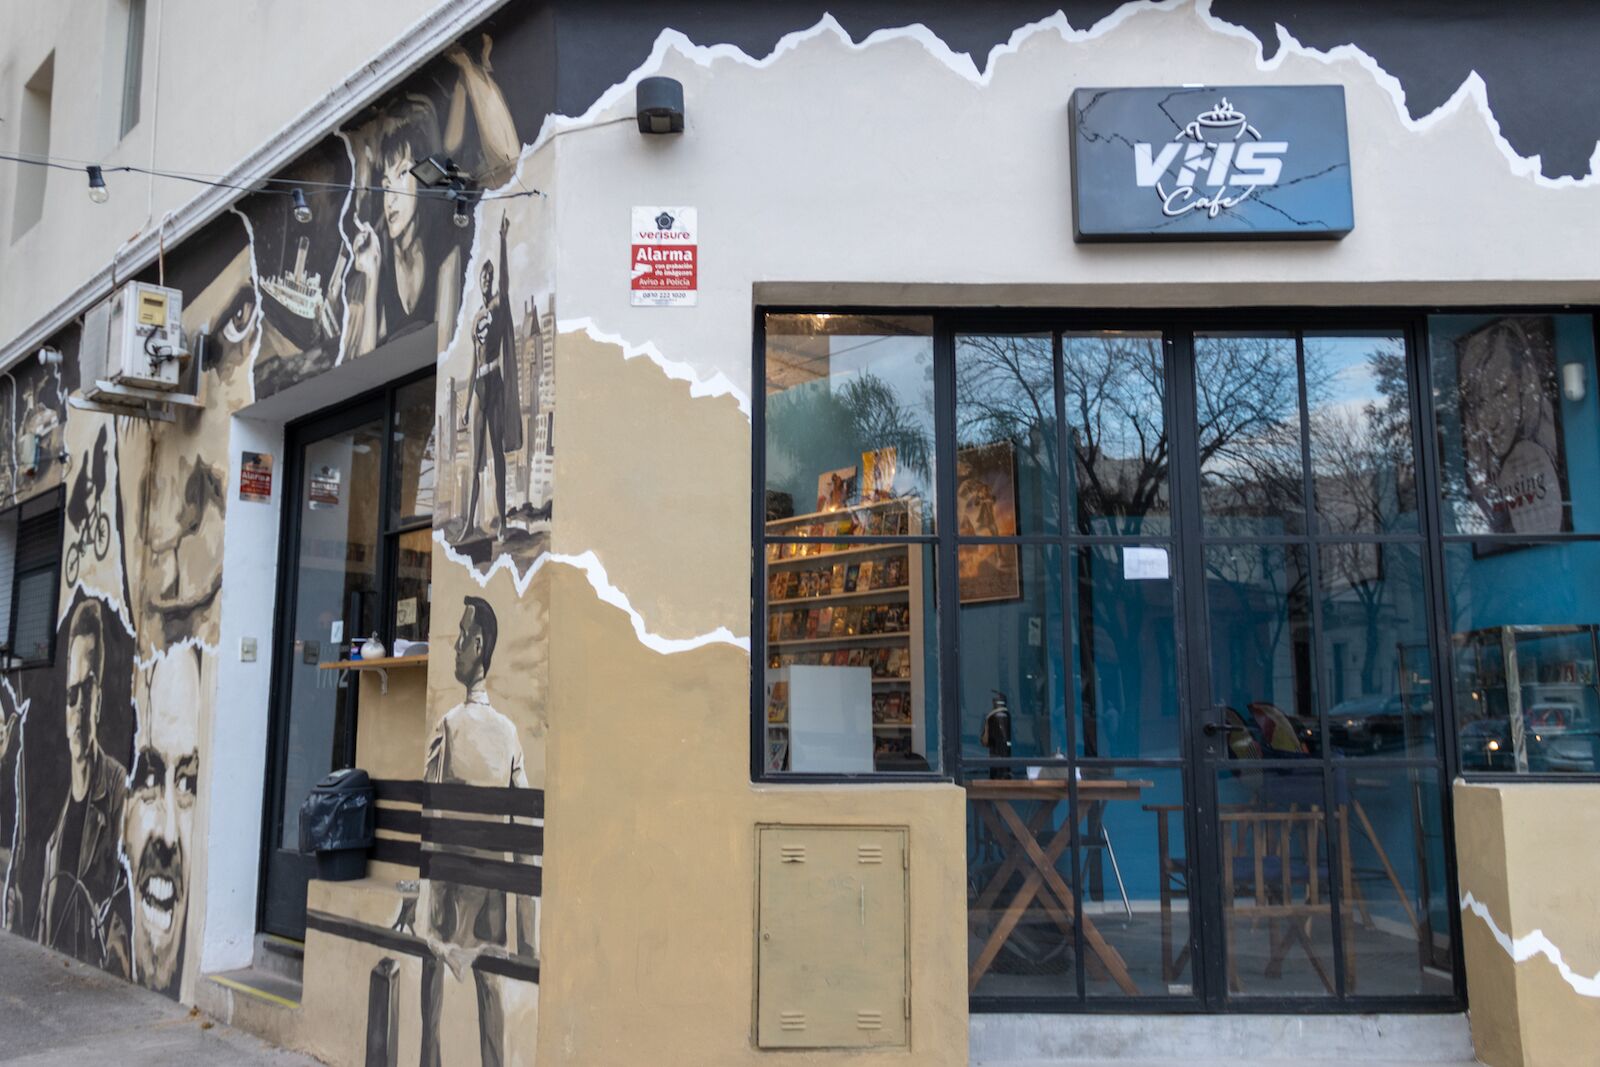 VHSCafe-exterior-comic book cafes